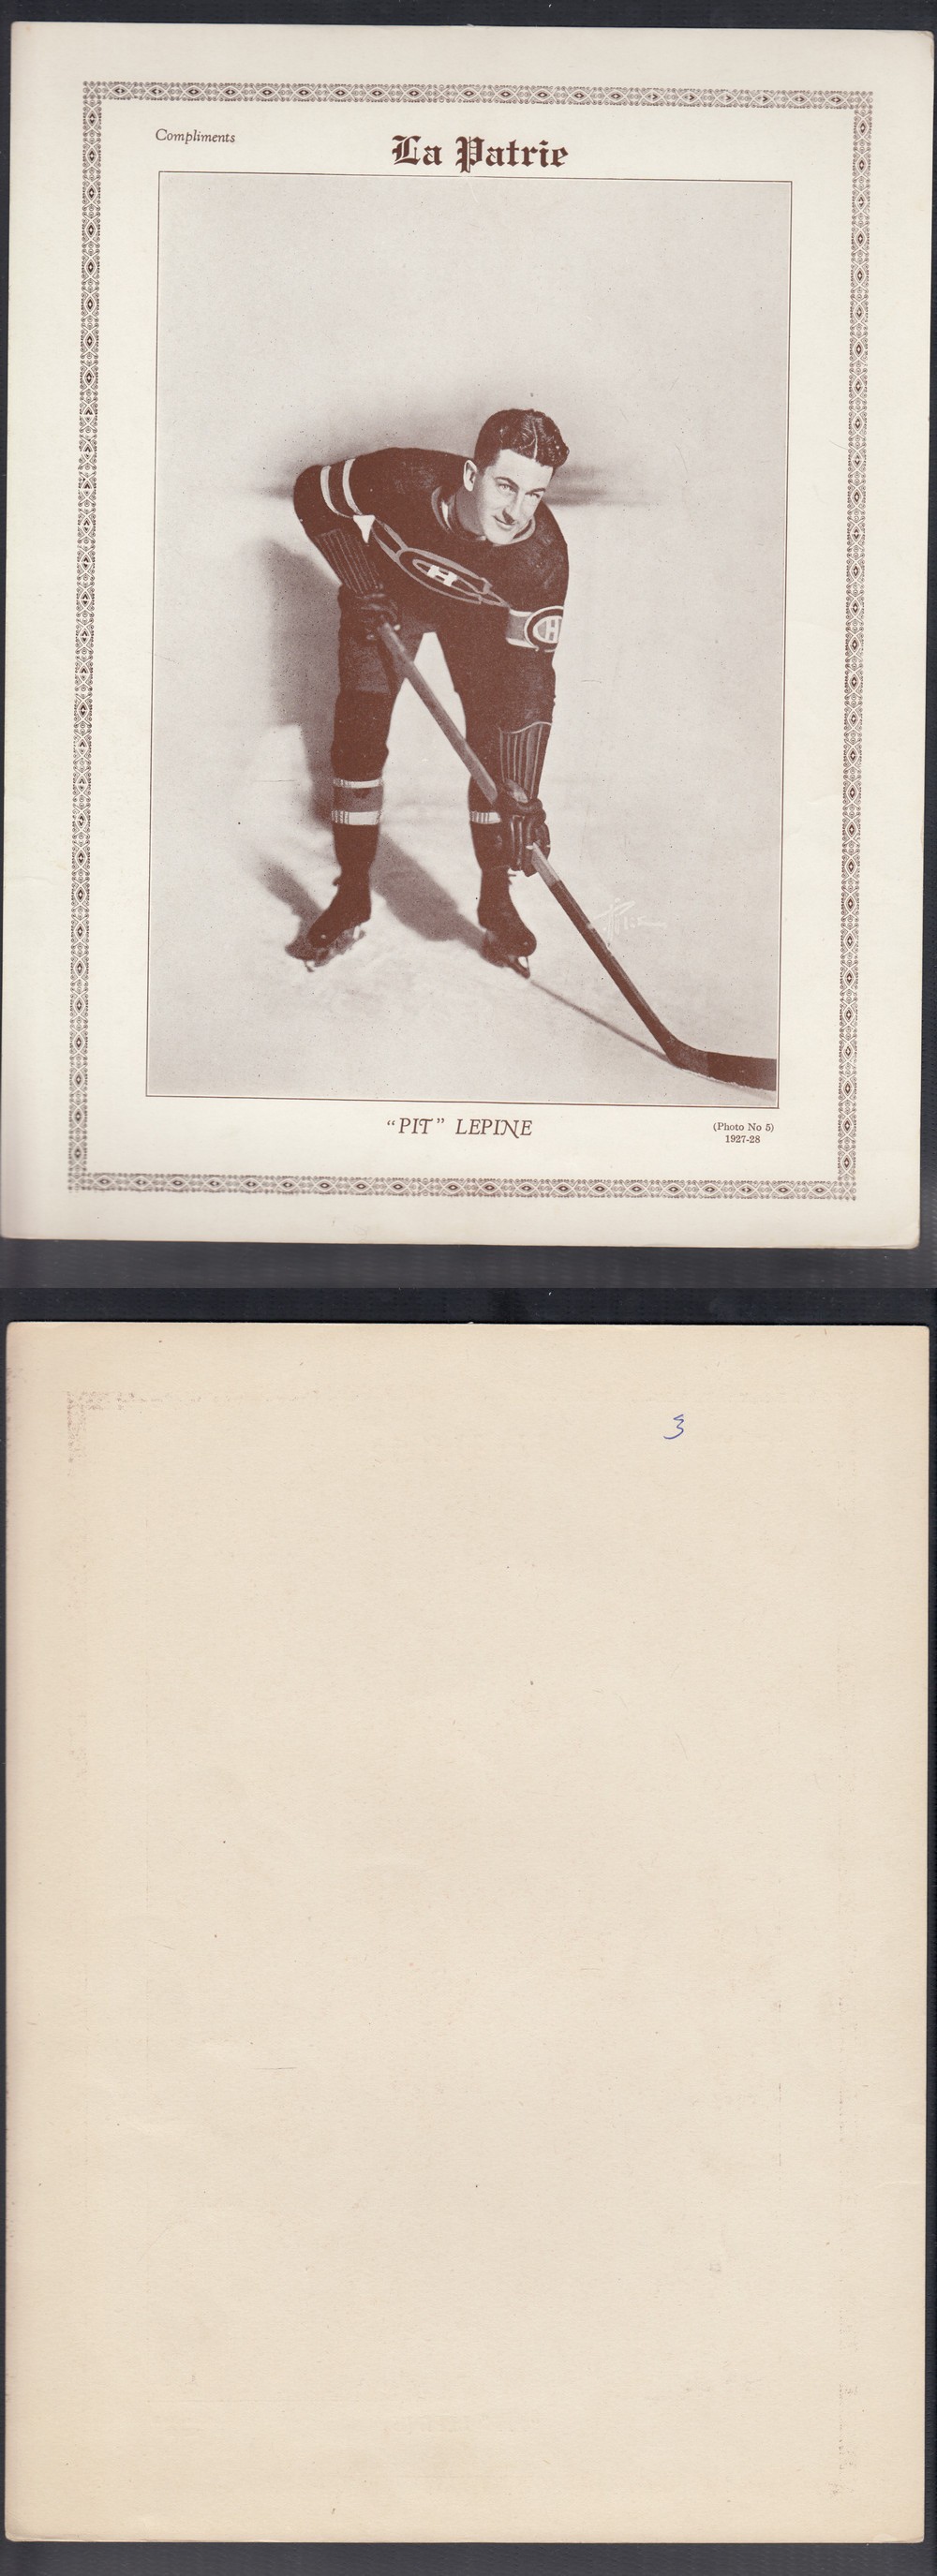 1927-28 LA PATRIE PHOTO #5 A. LEPINE photo